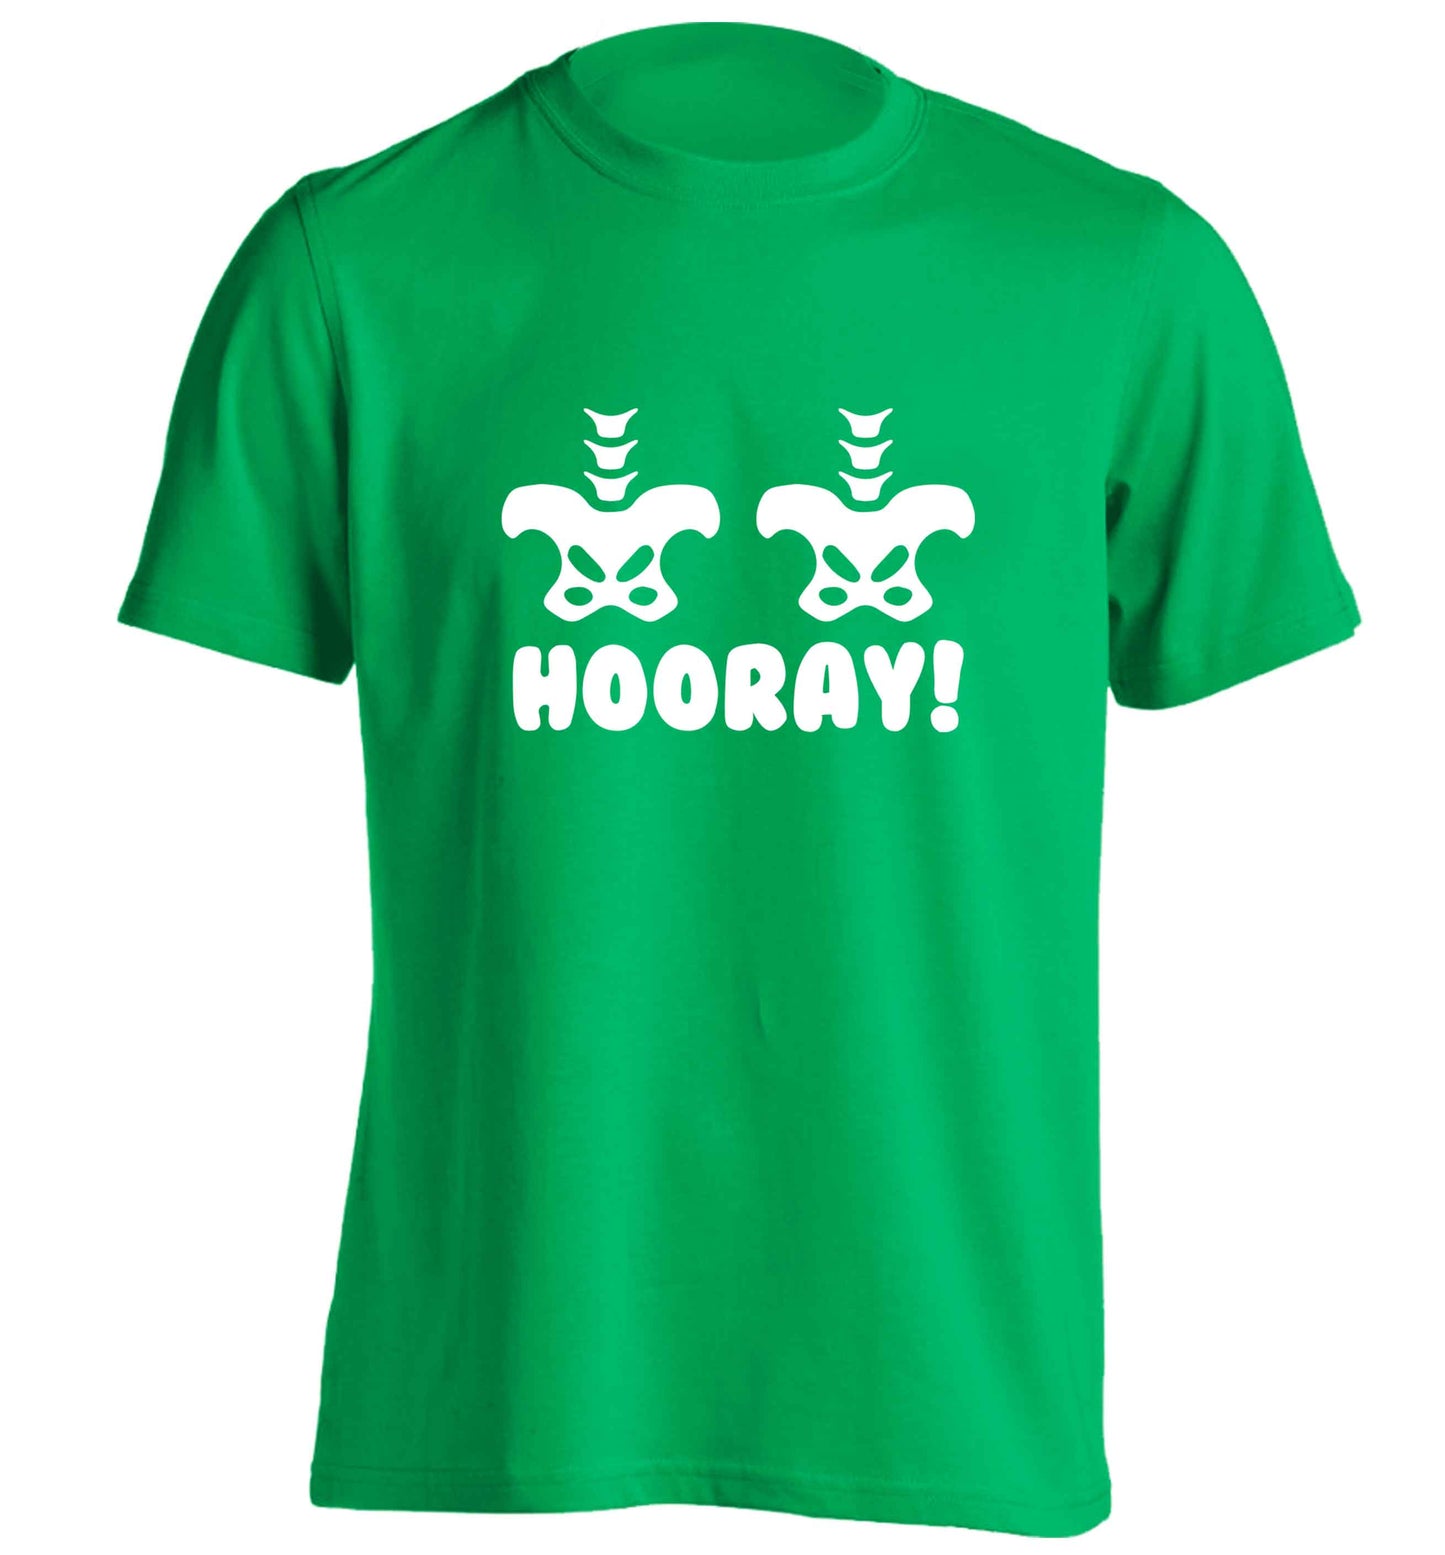 Hip Hip Hooray! adults unisex green Tshirt 2XL